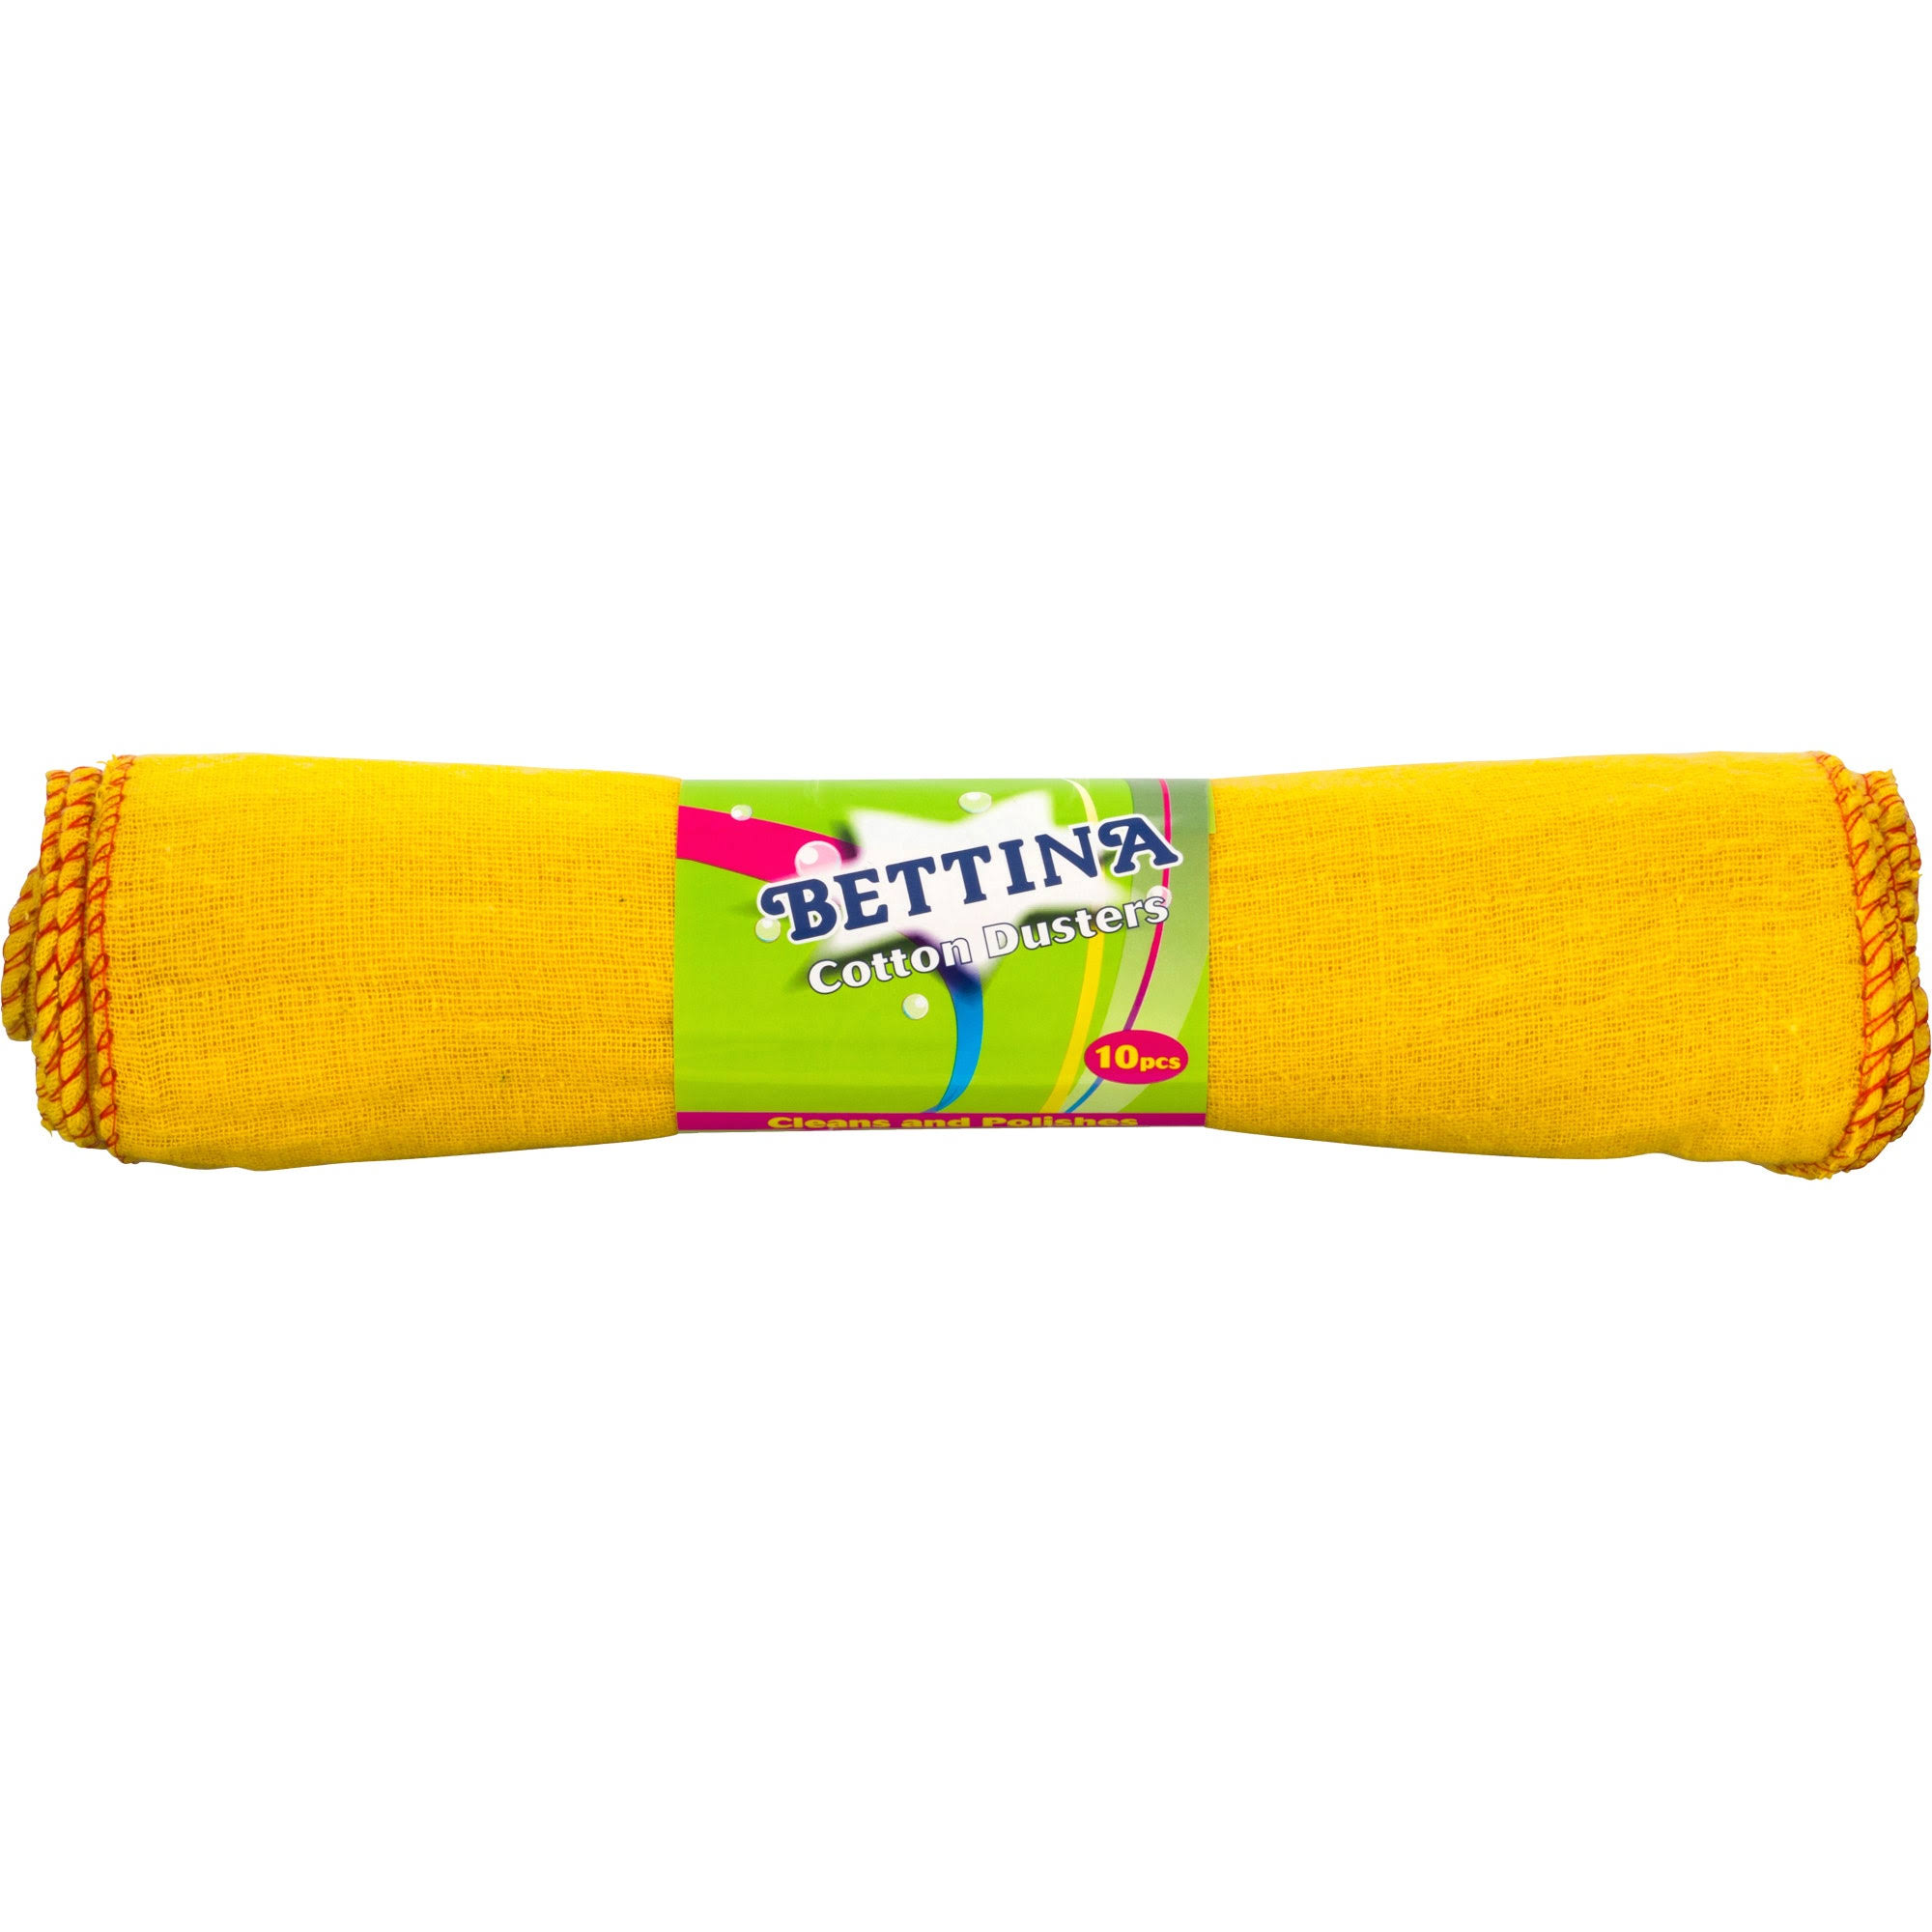 Bettina - Yellow Cotton Dusters 10pk